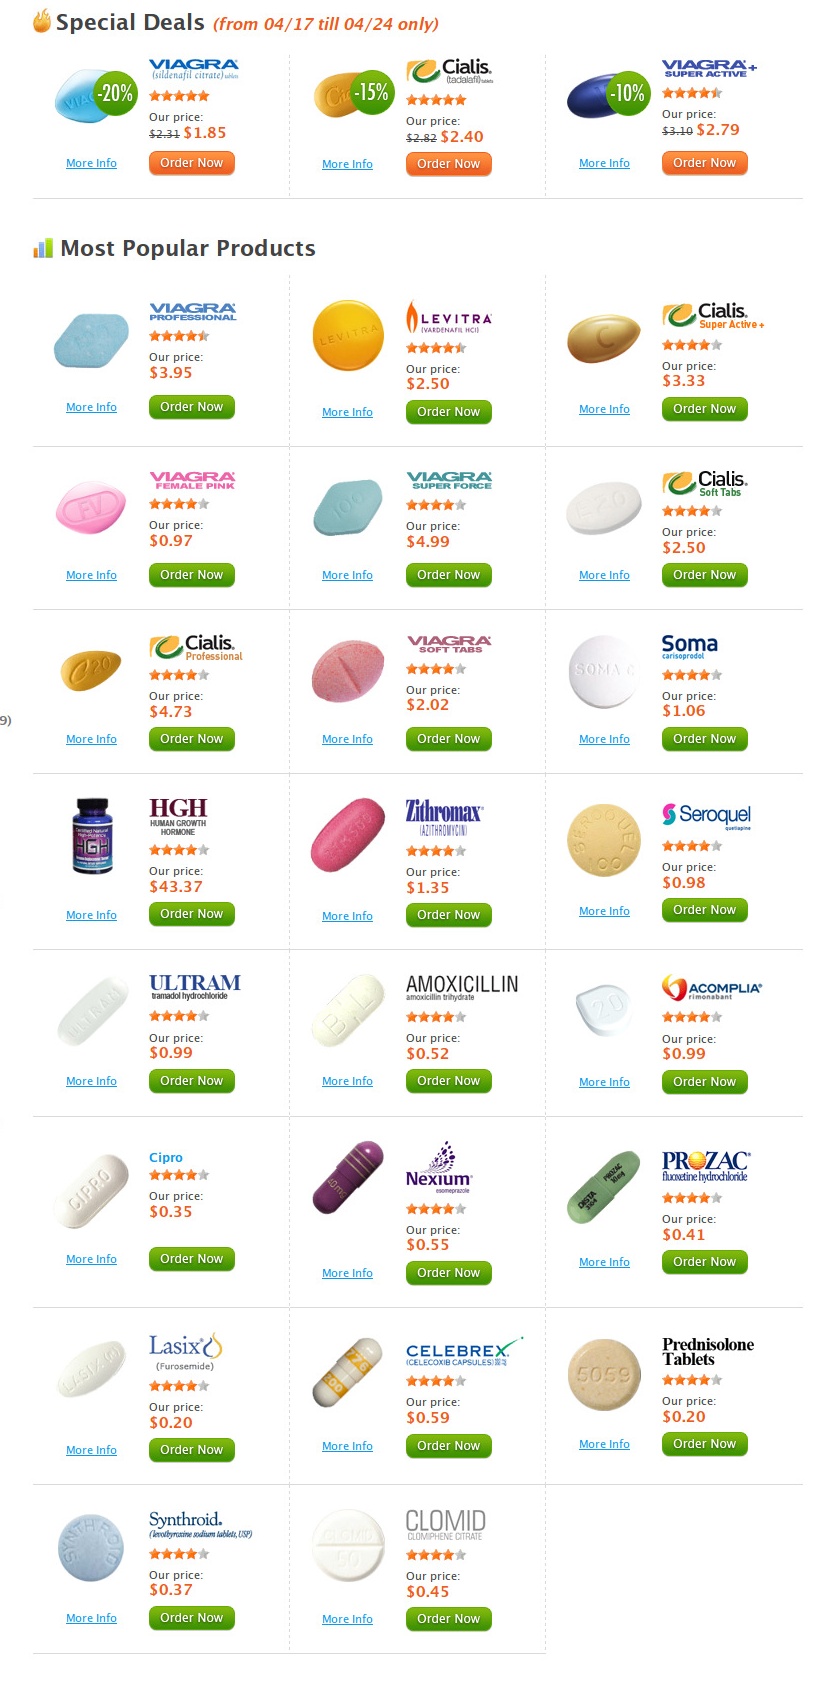 Buy Bactrim online and get prescription